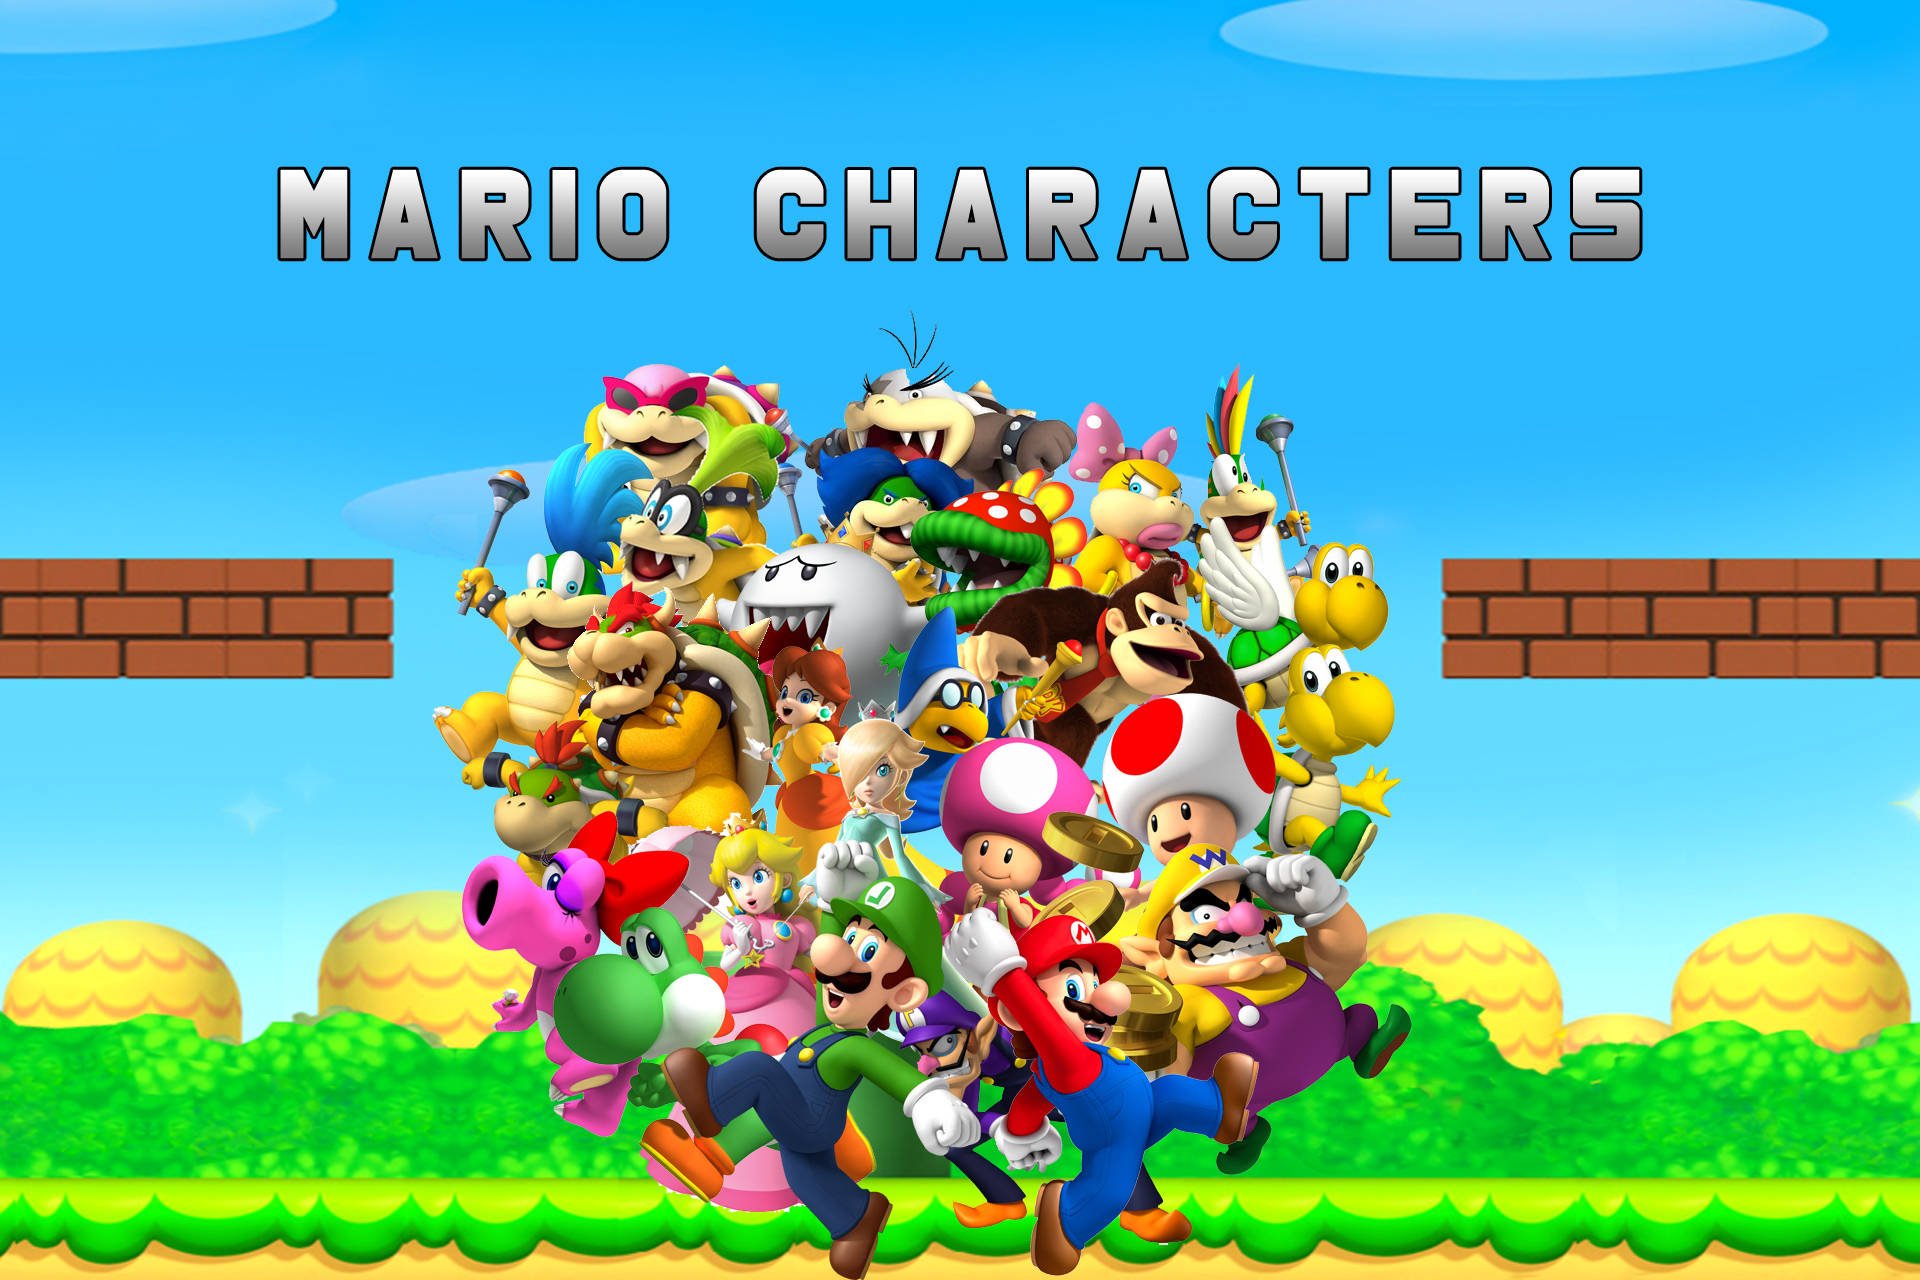 Nintendo Characters Wallpaper